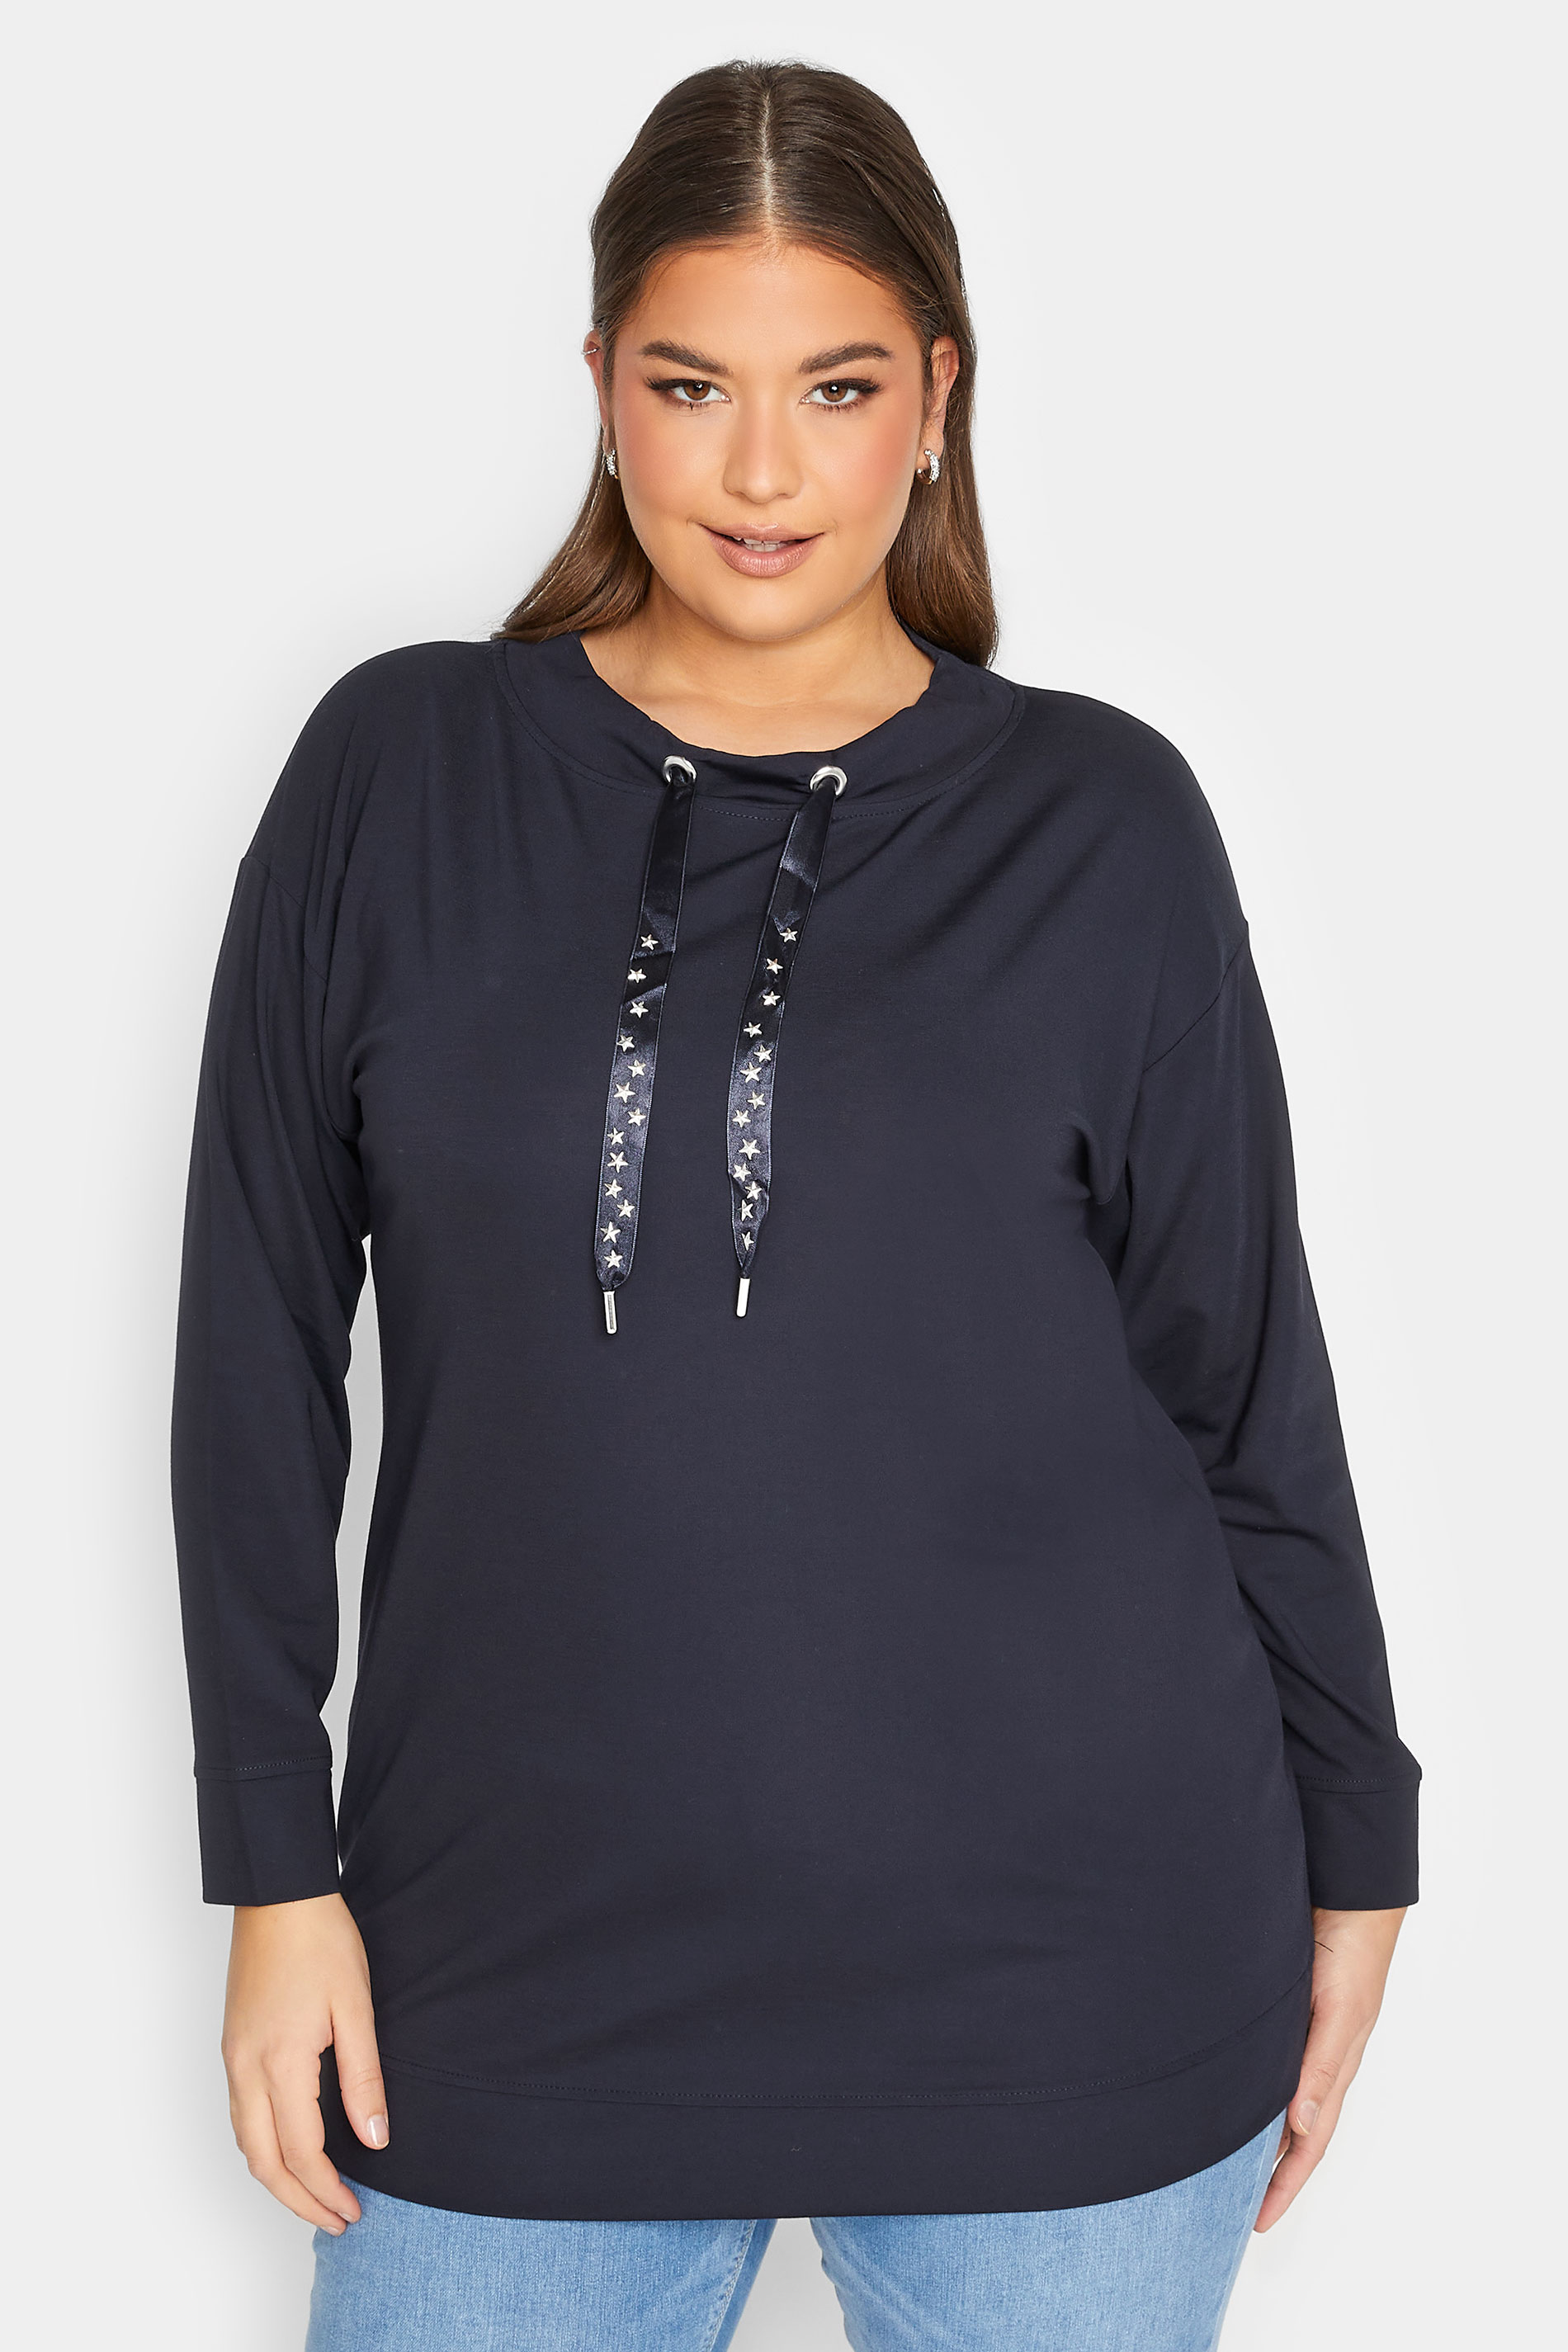 YOURS LUXURY Plus Size Navy Blue Star Embellished Sweatshirt | Yours Clothing 1